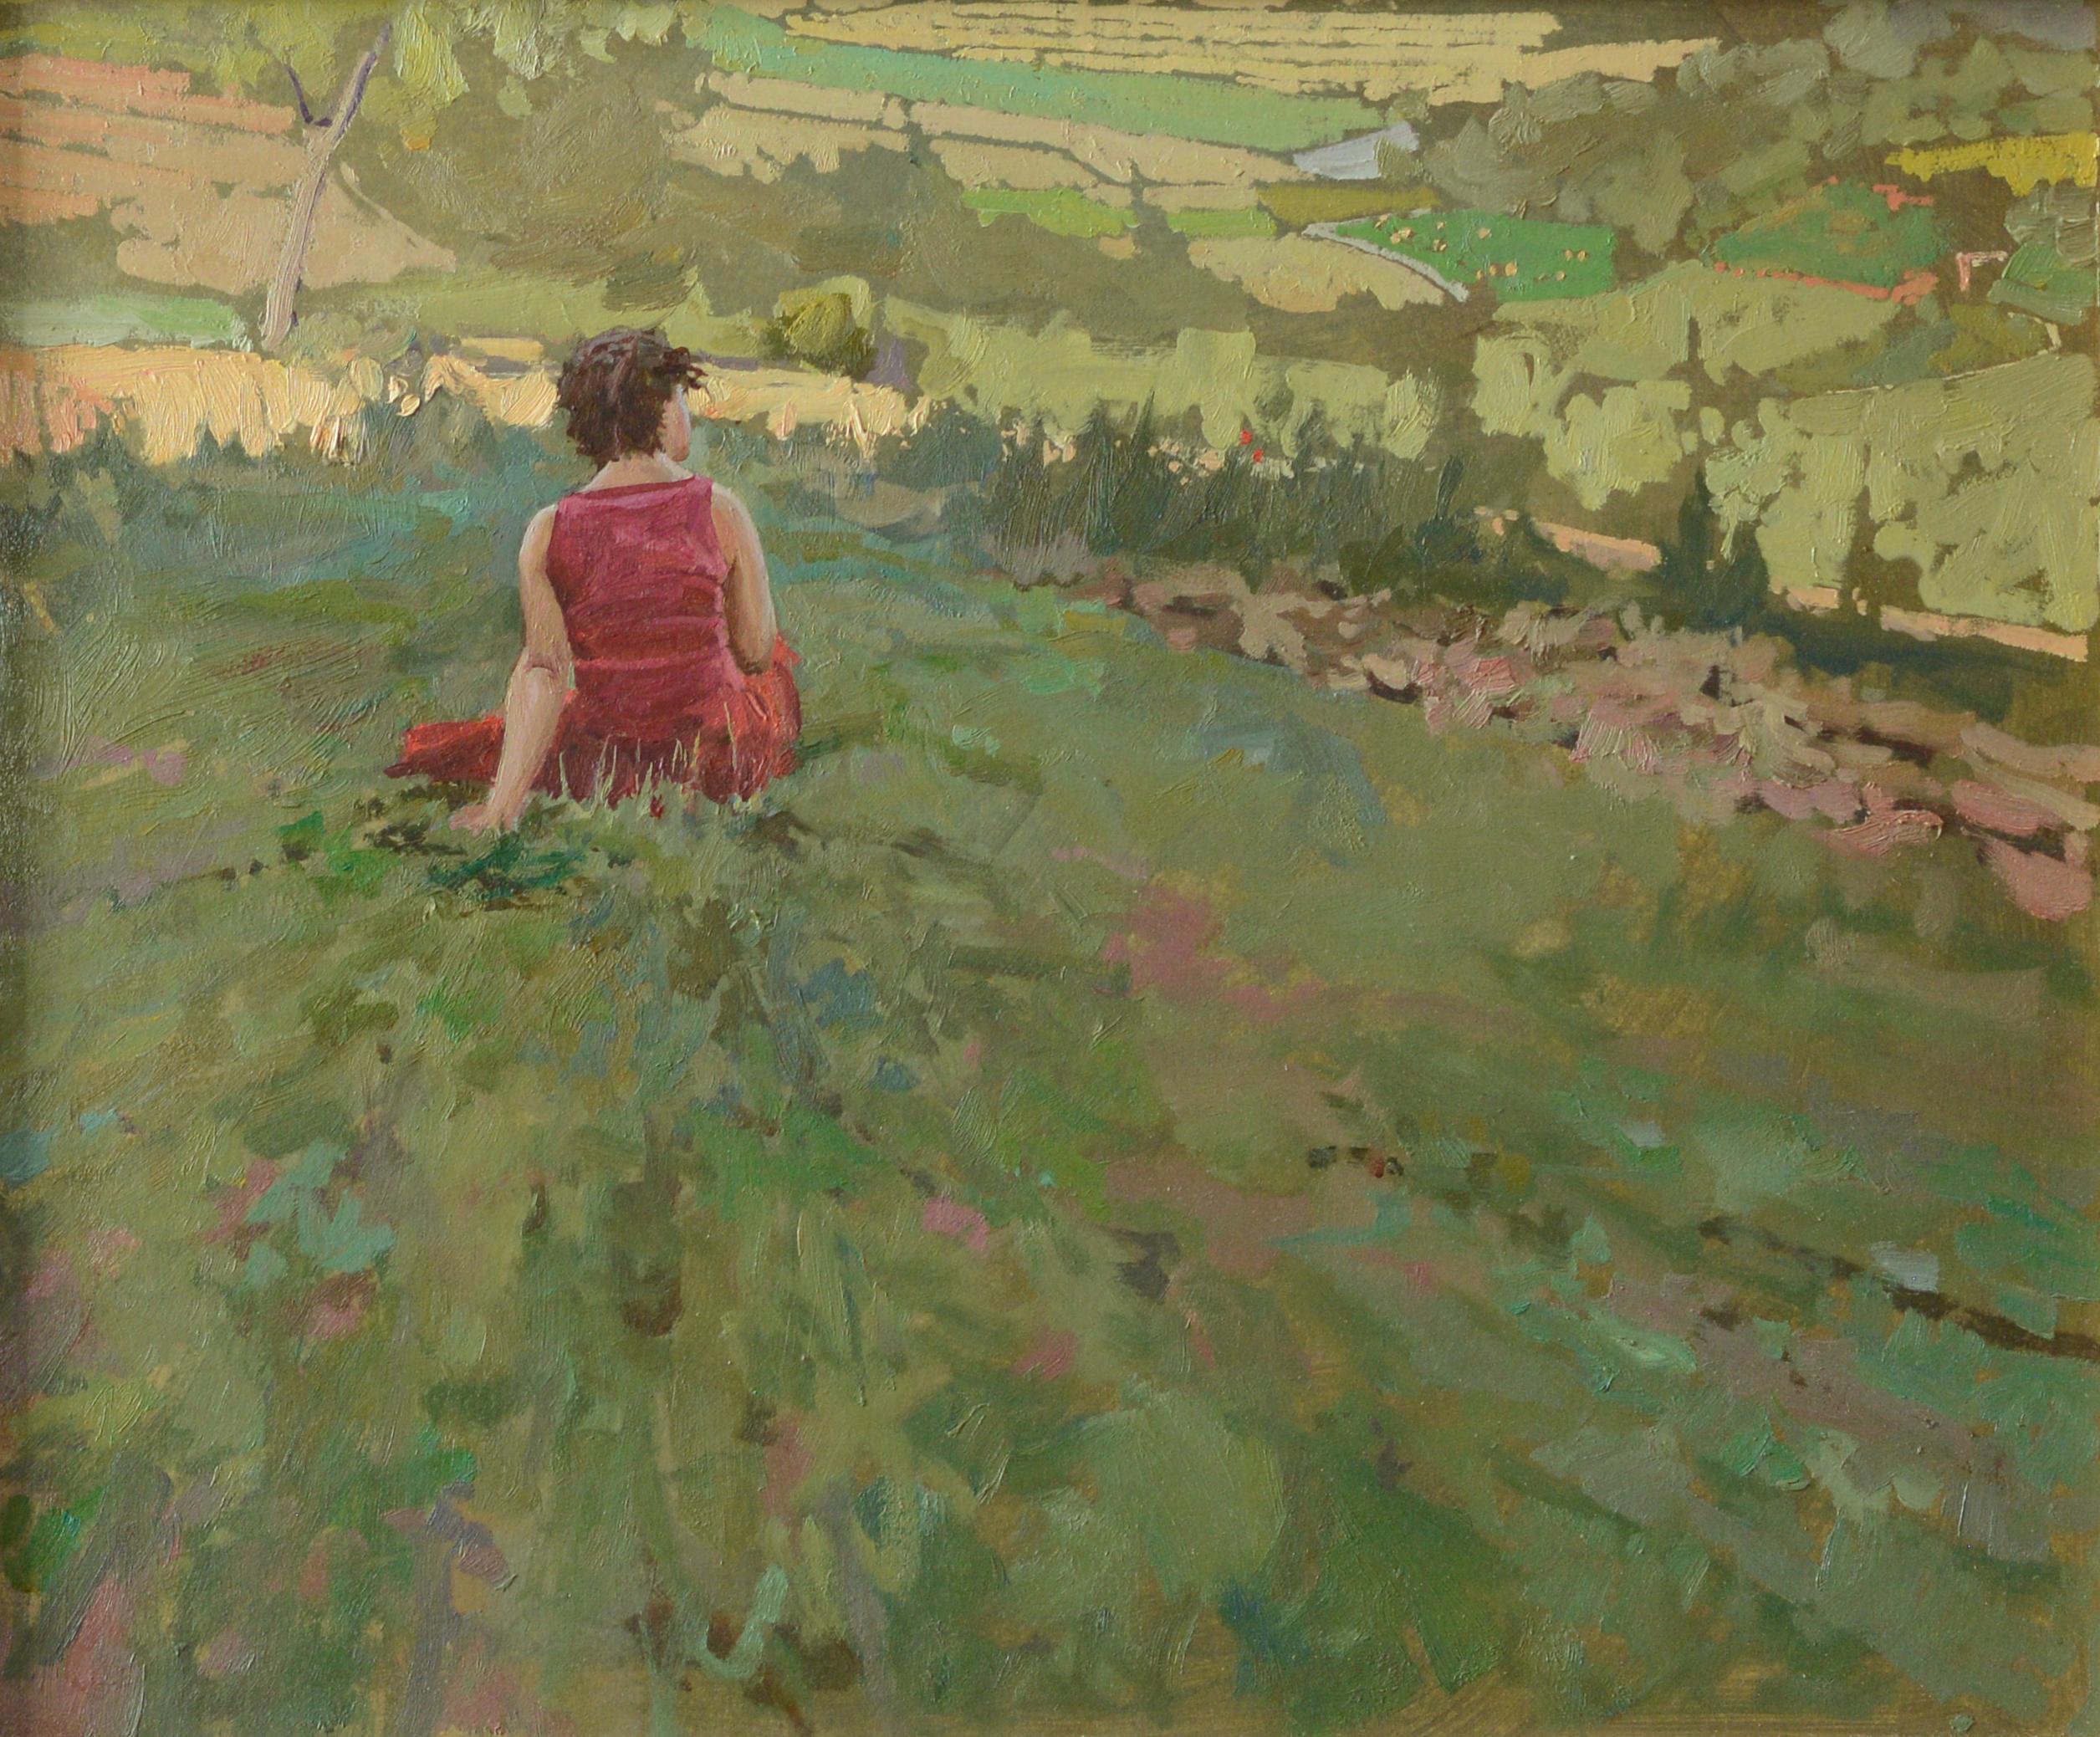 Daud Akhriev Landscape Painting - "Kate in Her Fields" Oil Painting